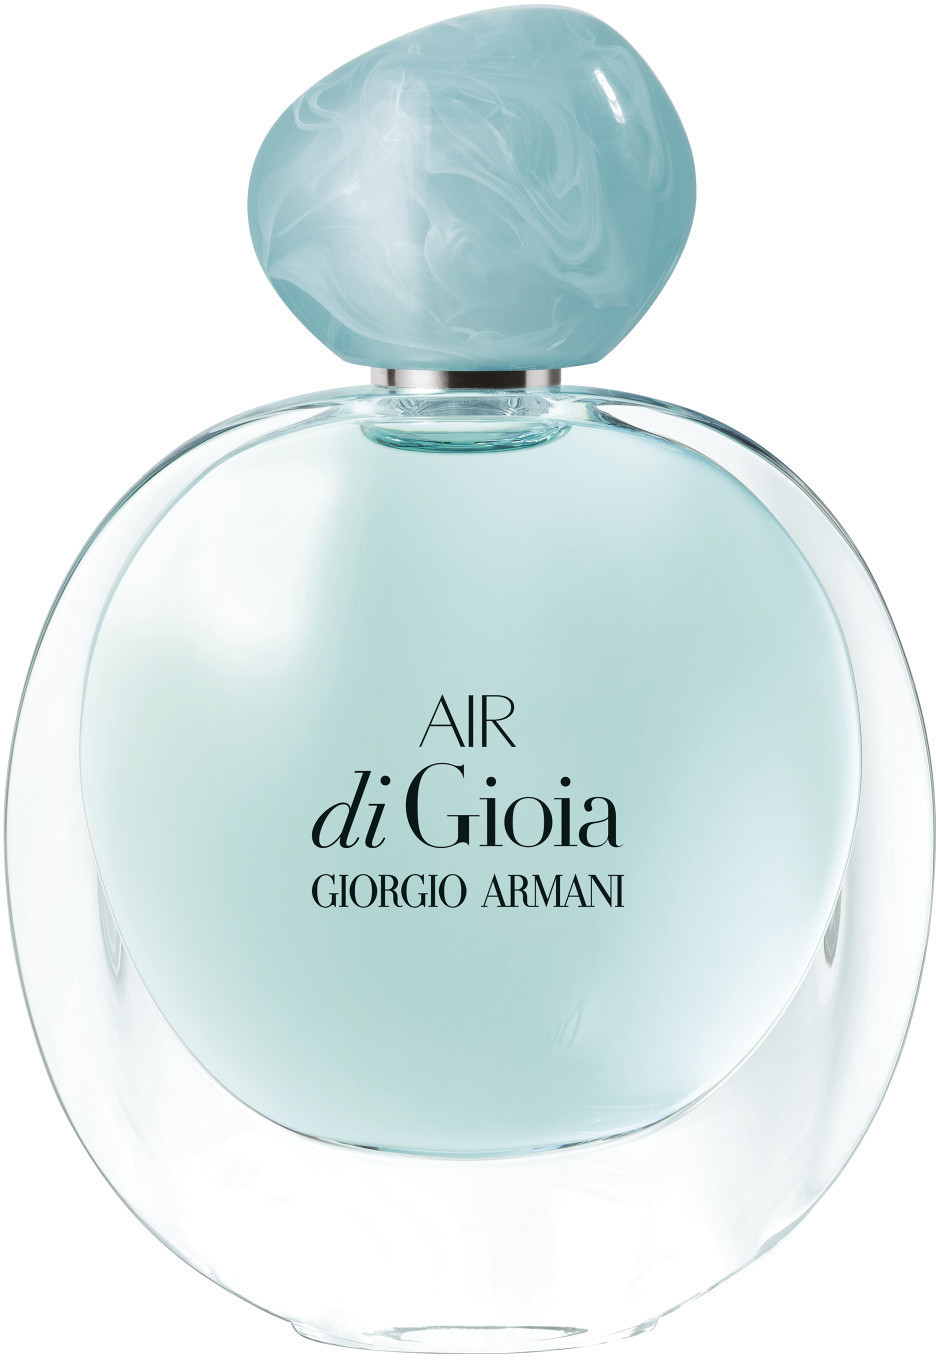 Photos - Women's Fragrance Armani Giorgio  Giorgio  Air di Gioia Eau de Parfum  (50ml)